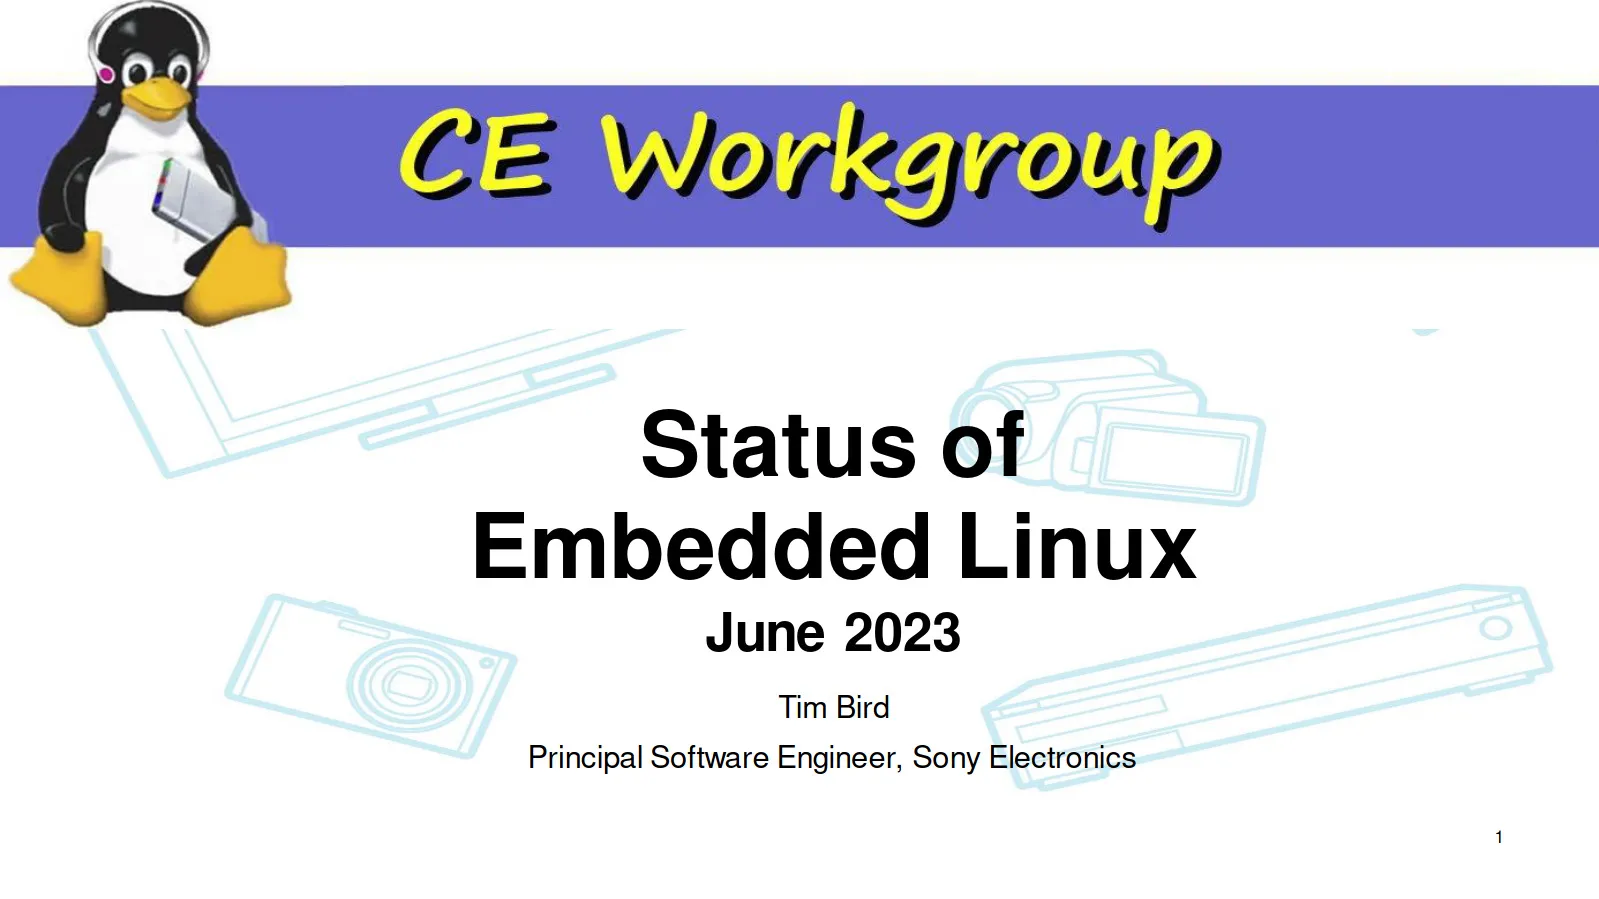 2023 Stand des Embedded Linux-Ökosystems